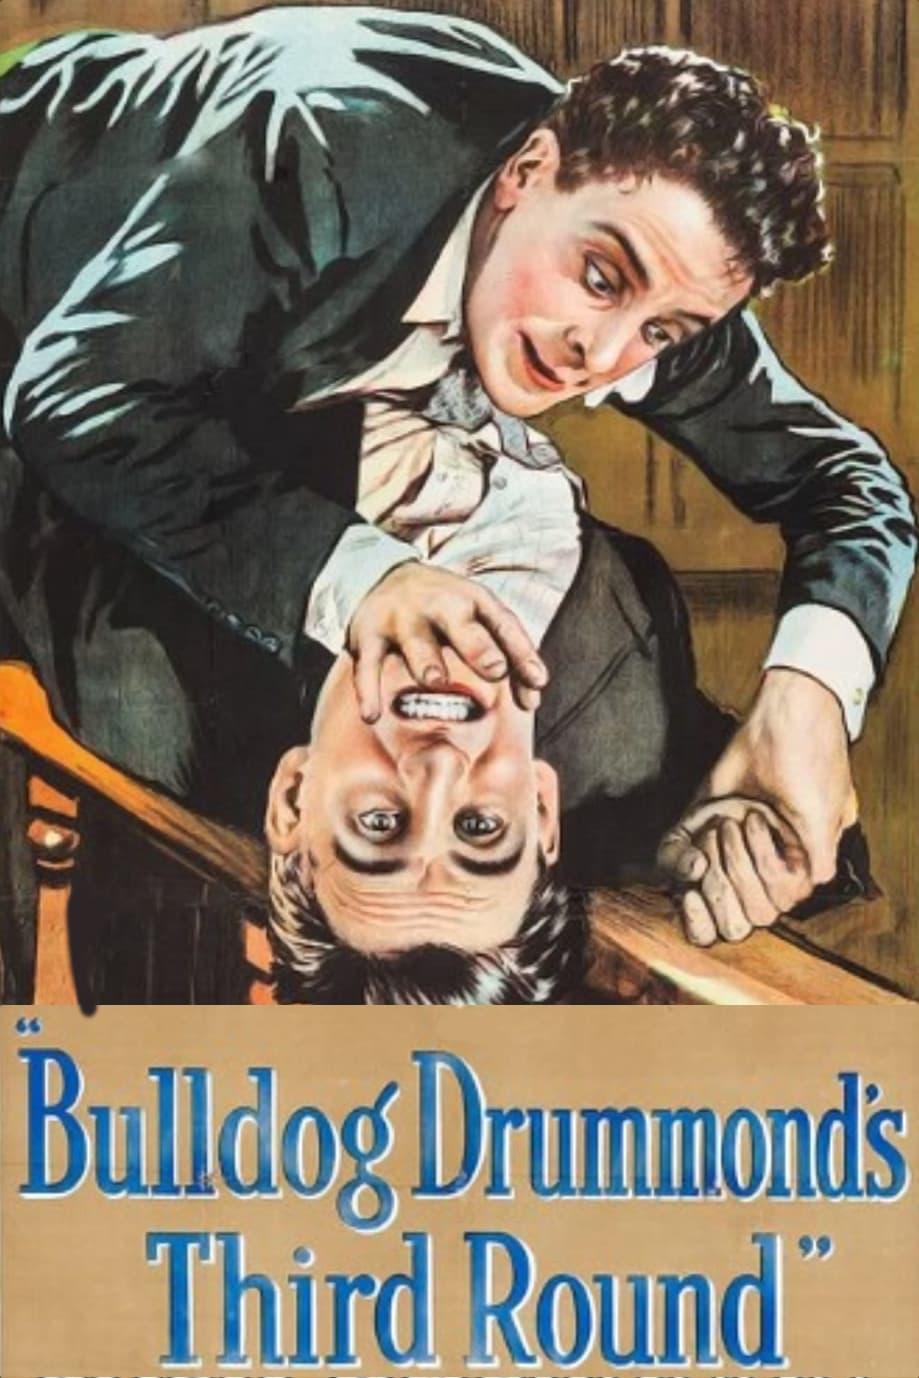 Bulldog Drummond's Third Round poster